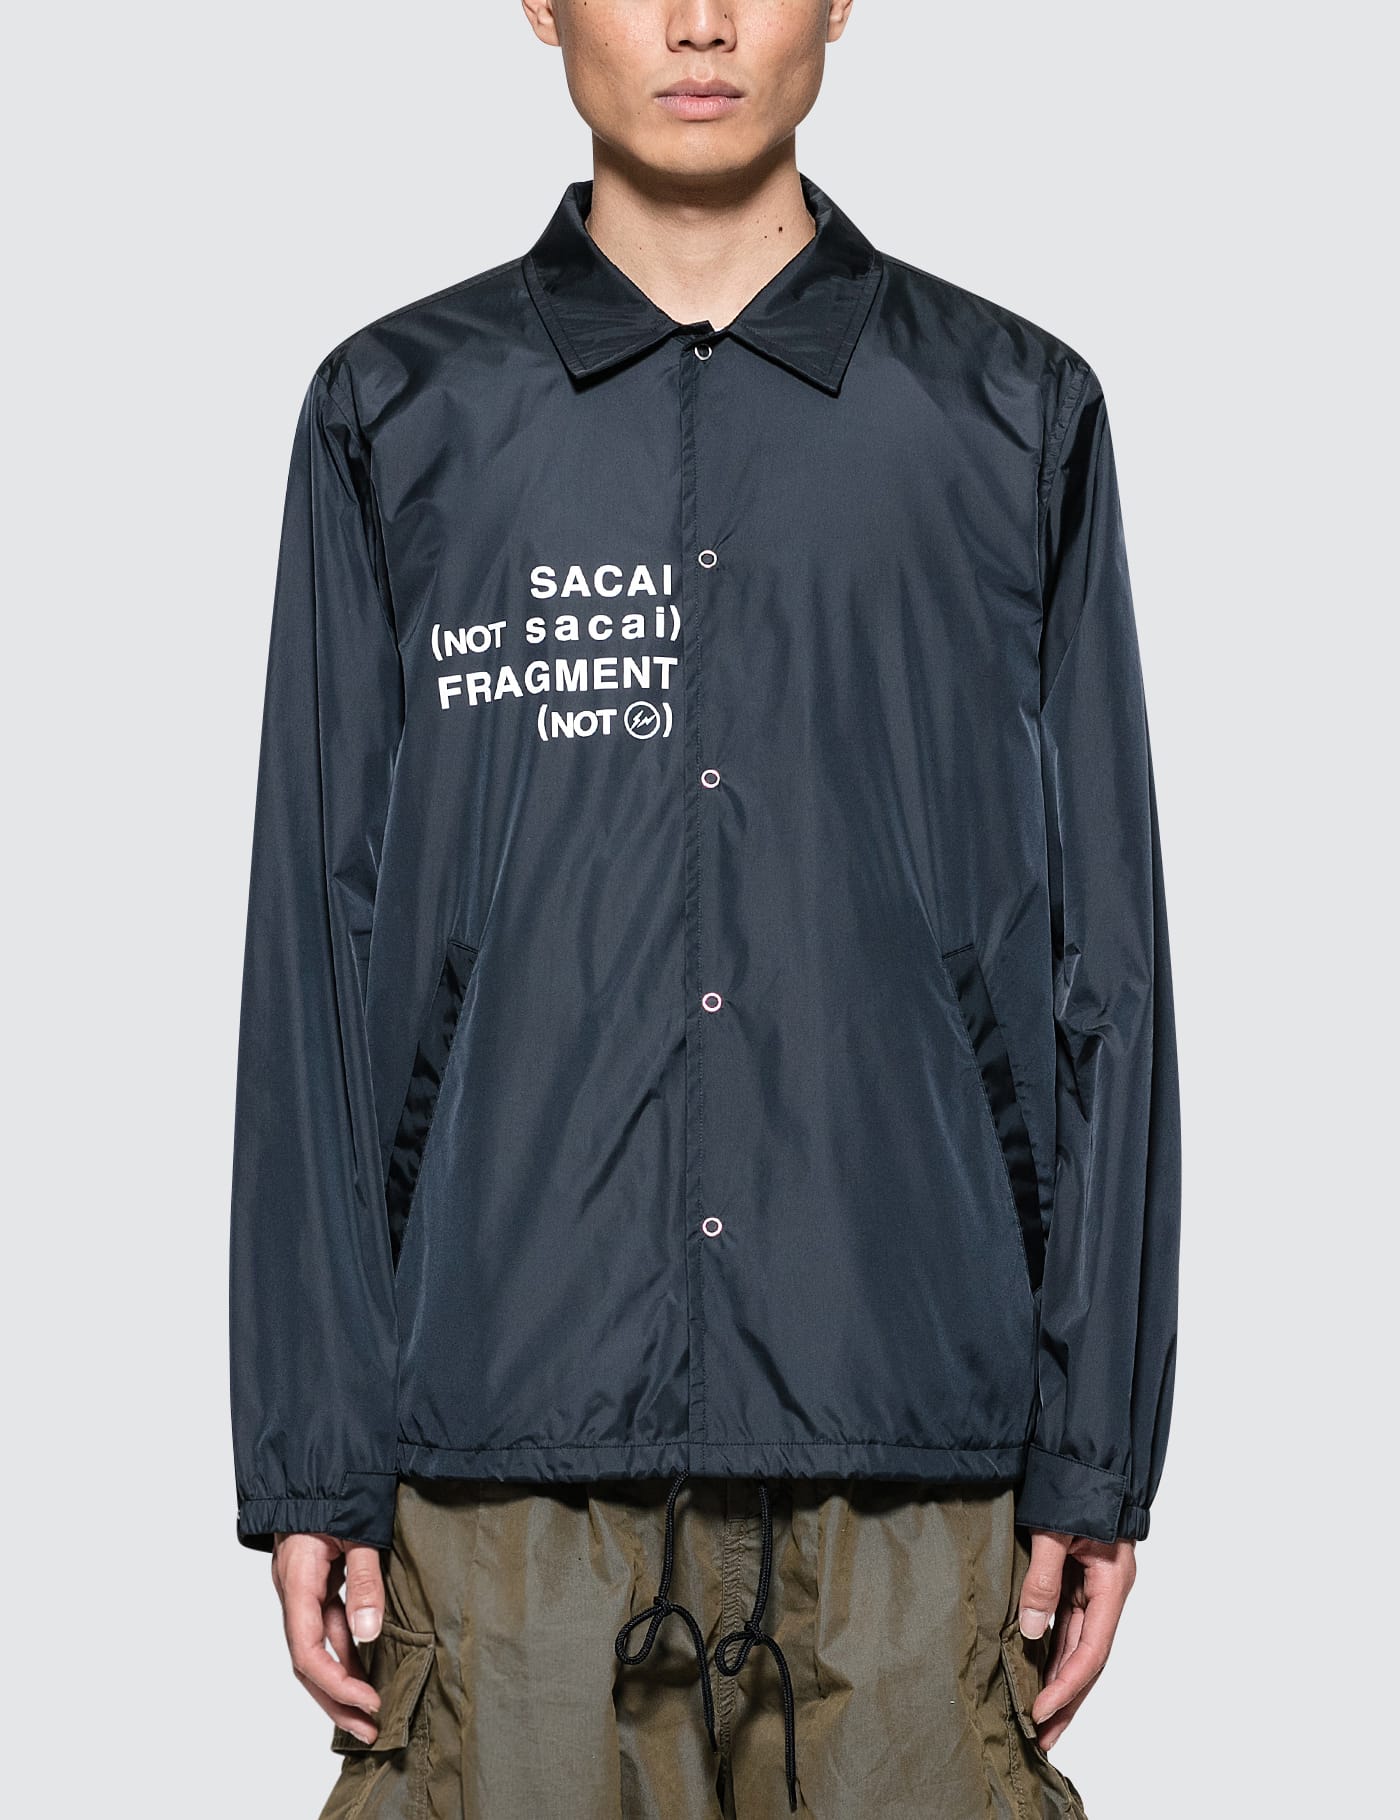 Sacai x Fragment Design - Sacai X Fragment Jacket | HBX - Globally 